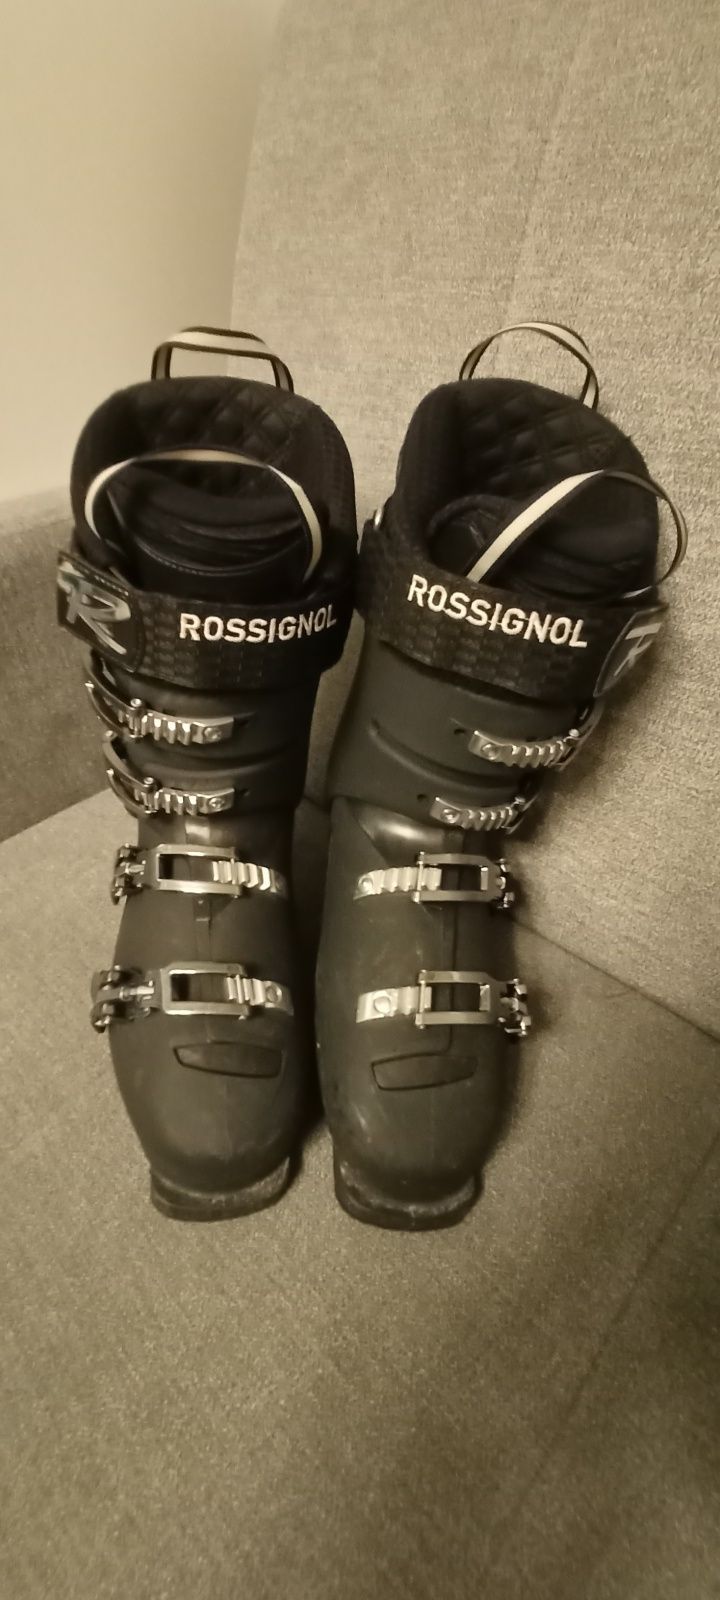 Grzane buty narciarskie Rossignol allspeed proheat 26.5